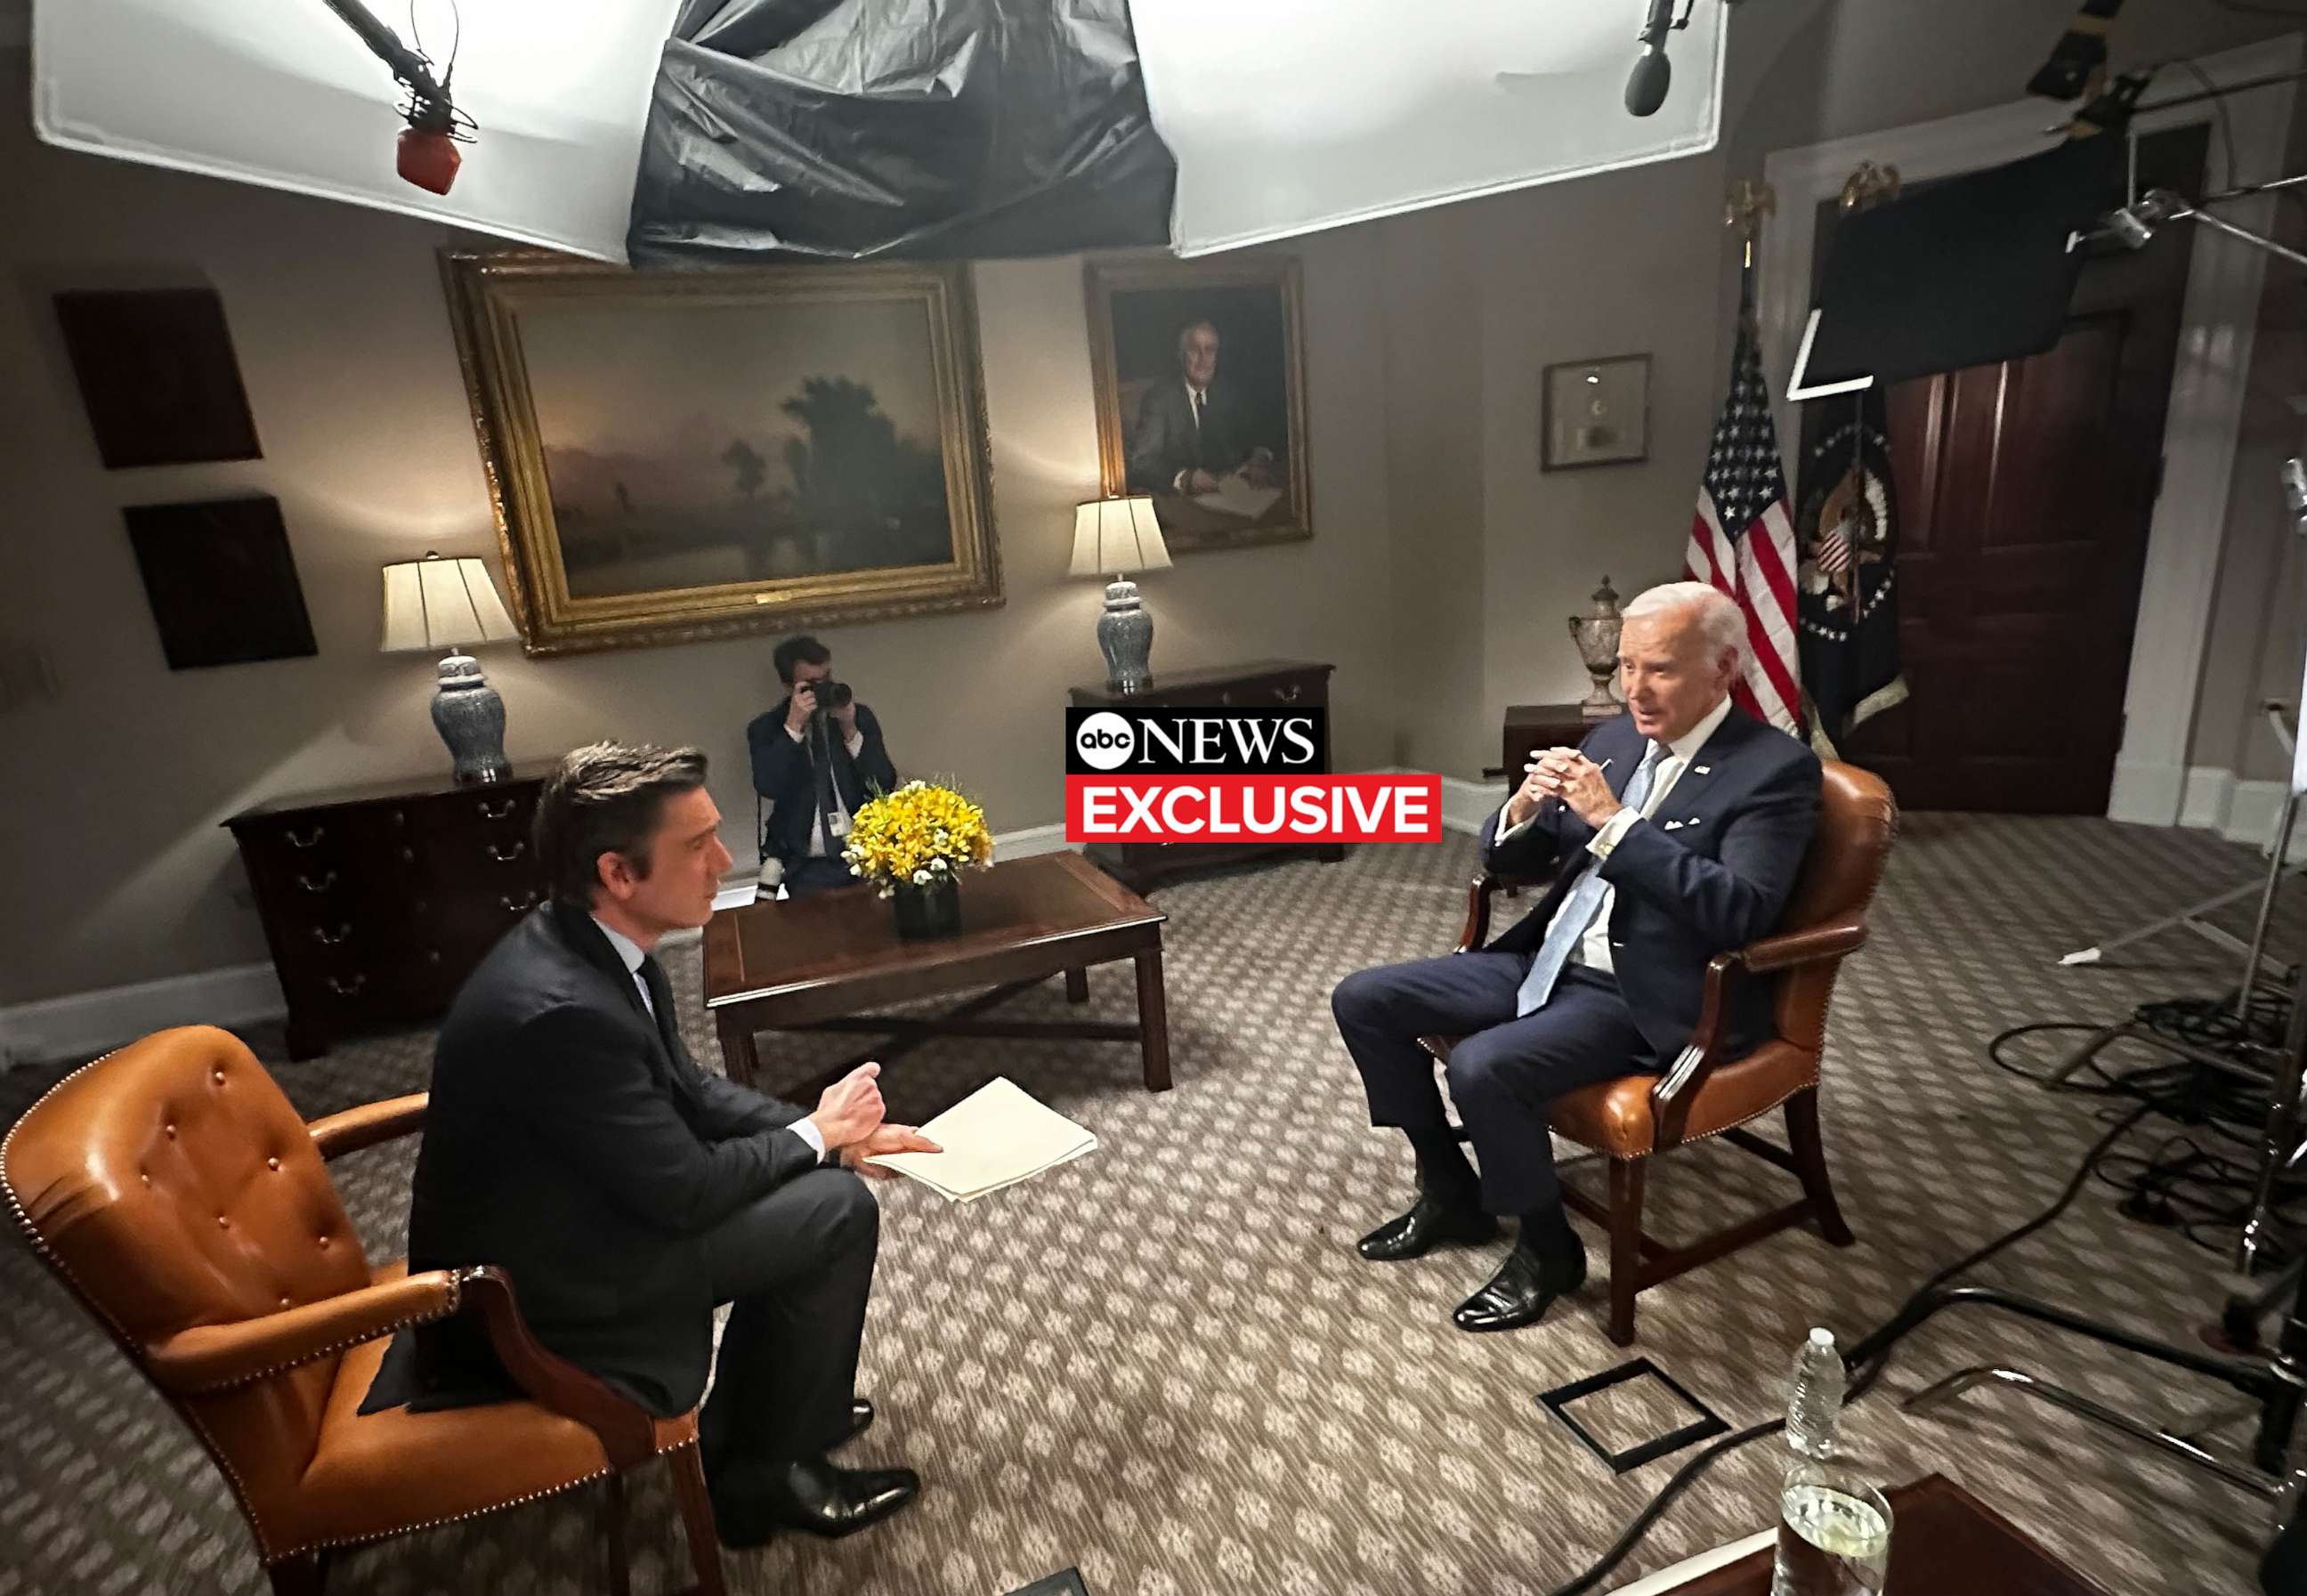 PHOTO: President Joe Biden speaks to ABC News "World News Tonight" anchor David Muir in an exclusive interview on Feb. 24, 2023.